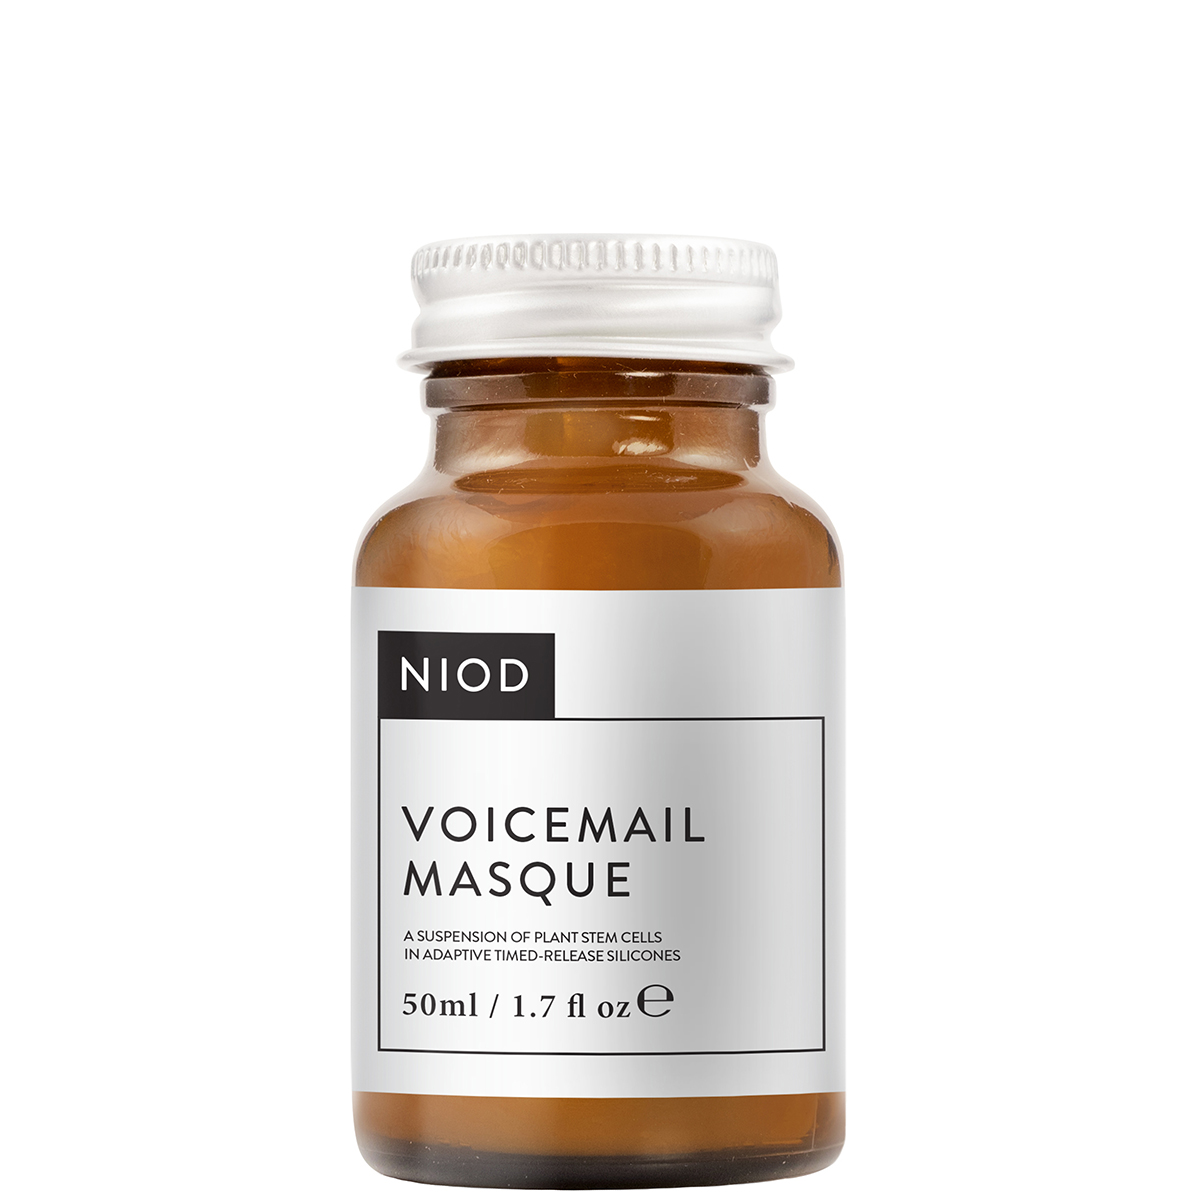 Niod Voicemail Masque